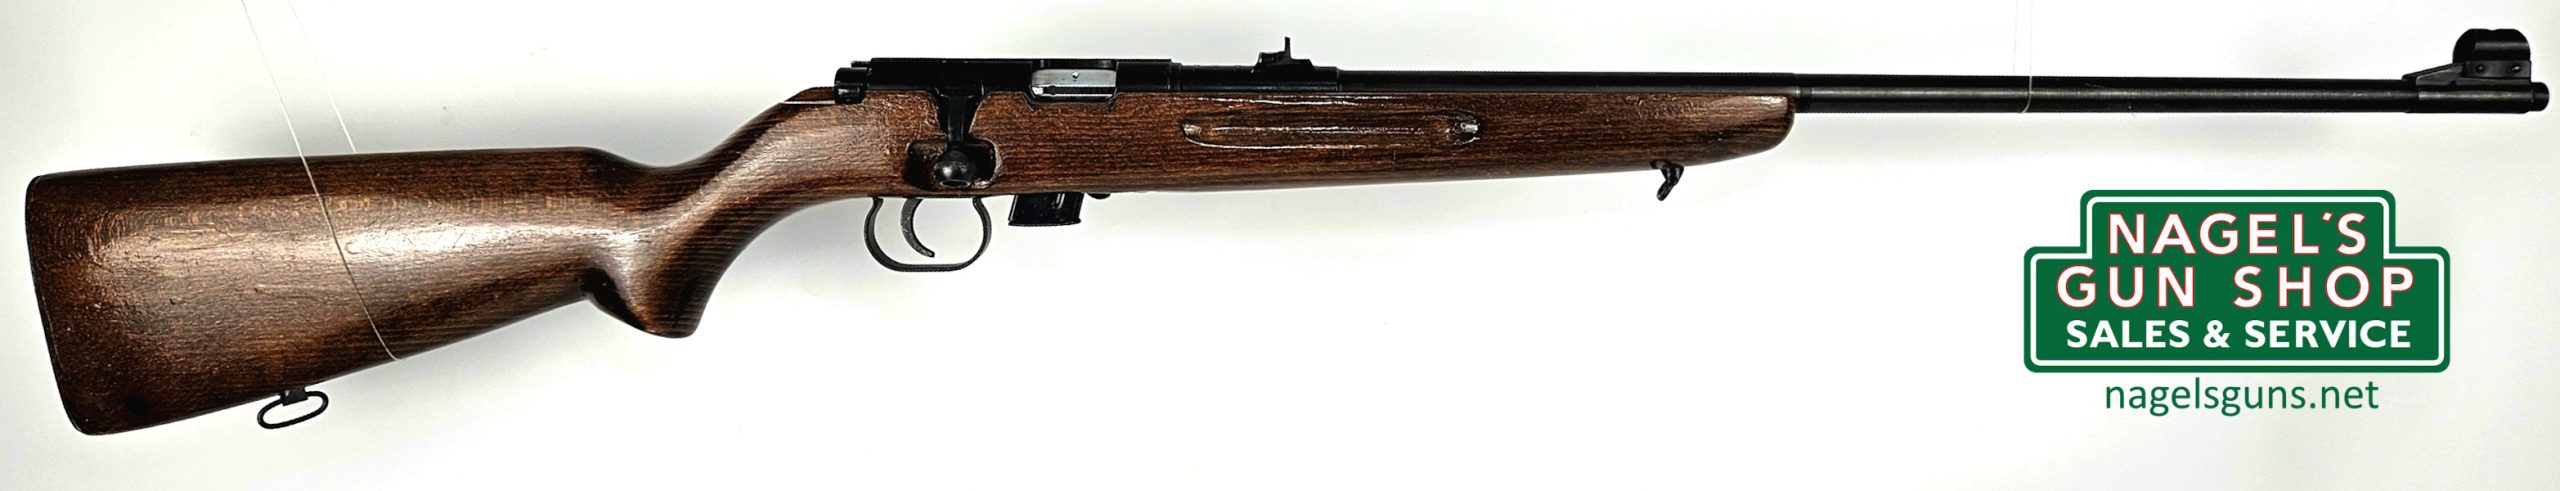 Romanian IMC2 22LR Rifle